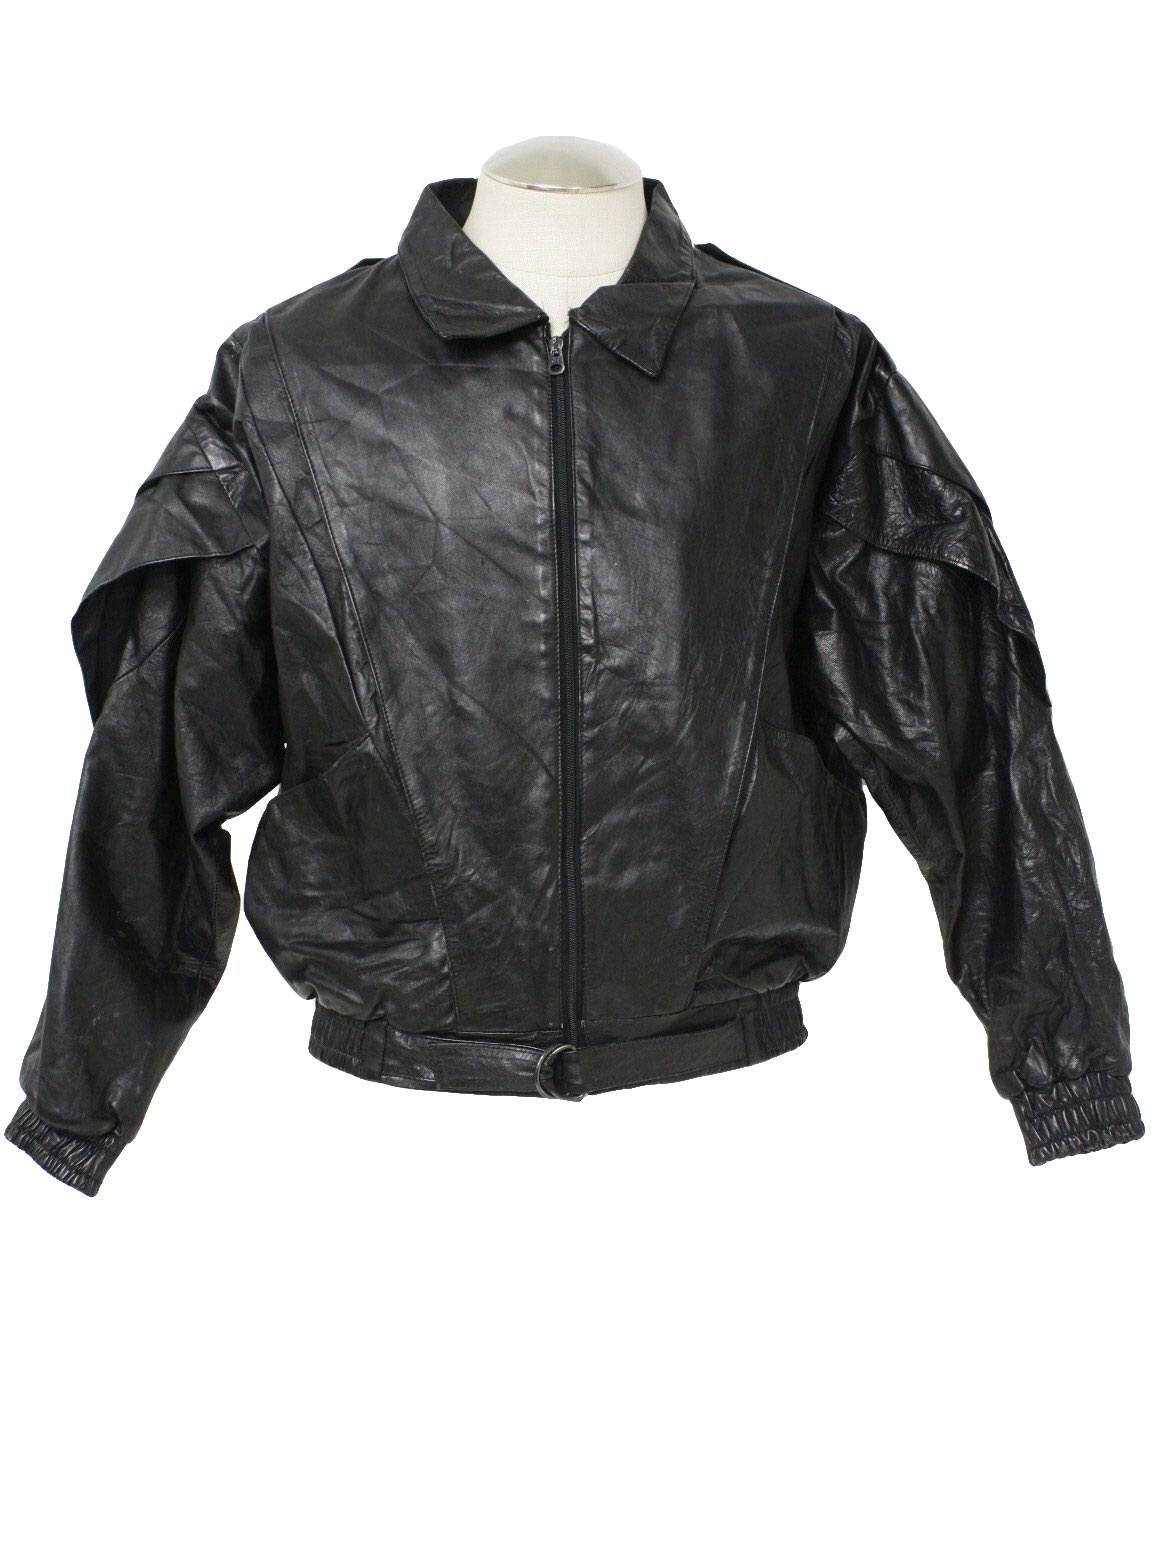 1980's Retro Leather Jacket: 80s -Aba- Mens black leather jacket with ...